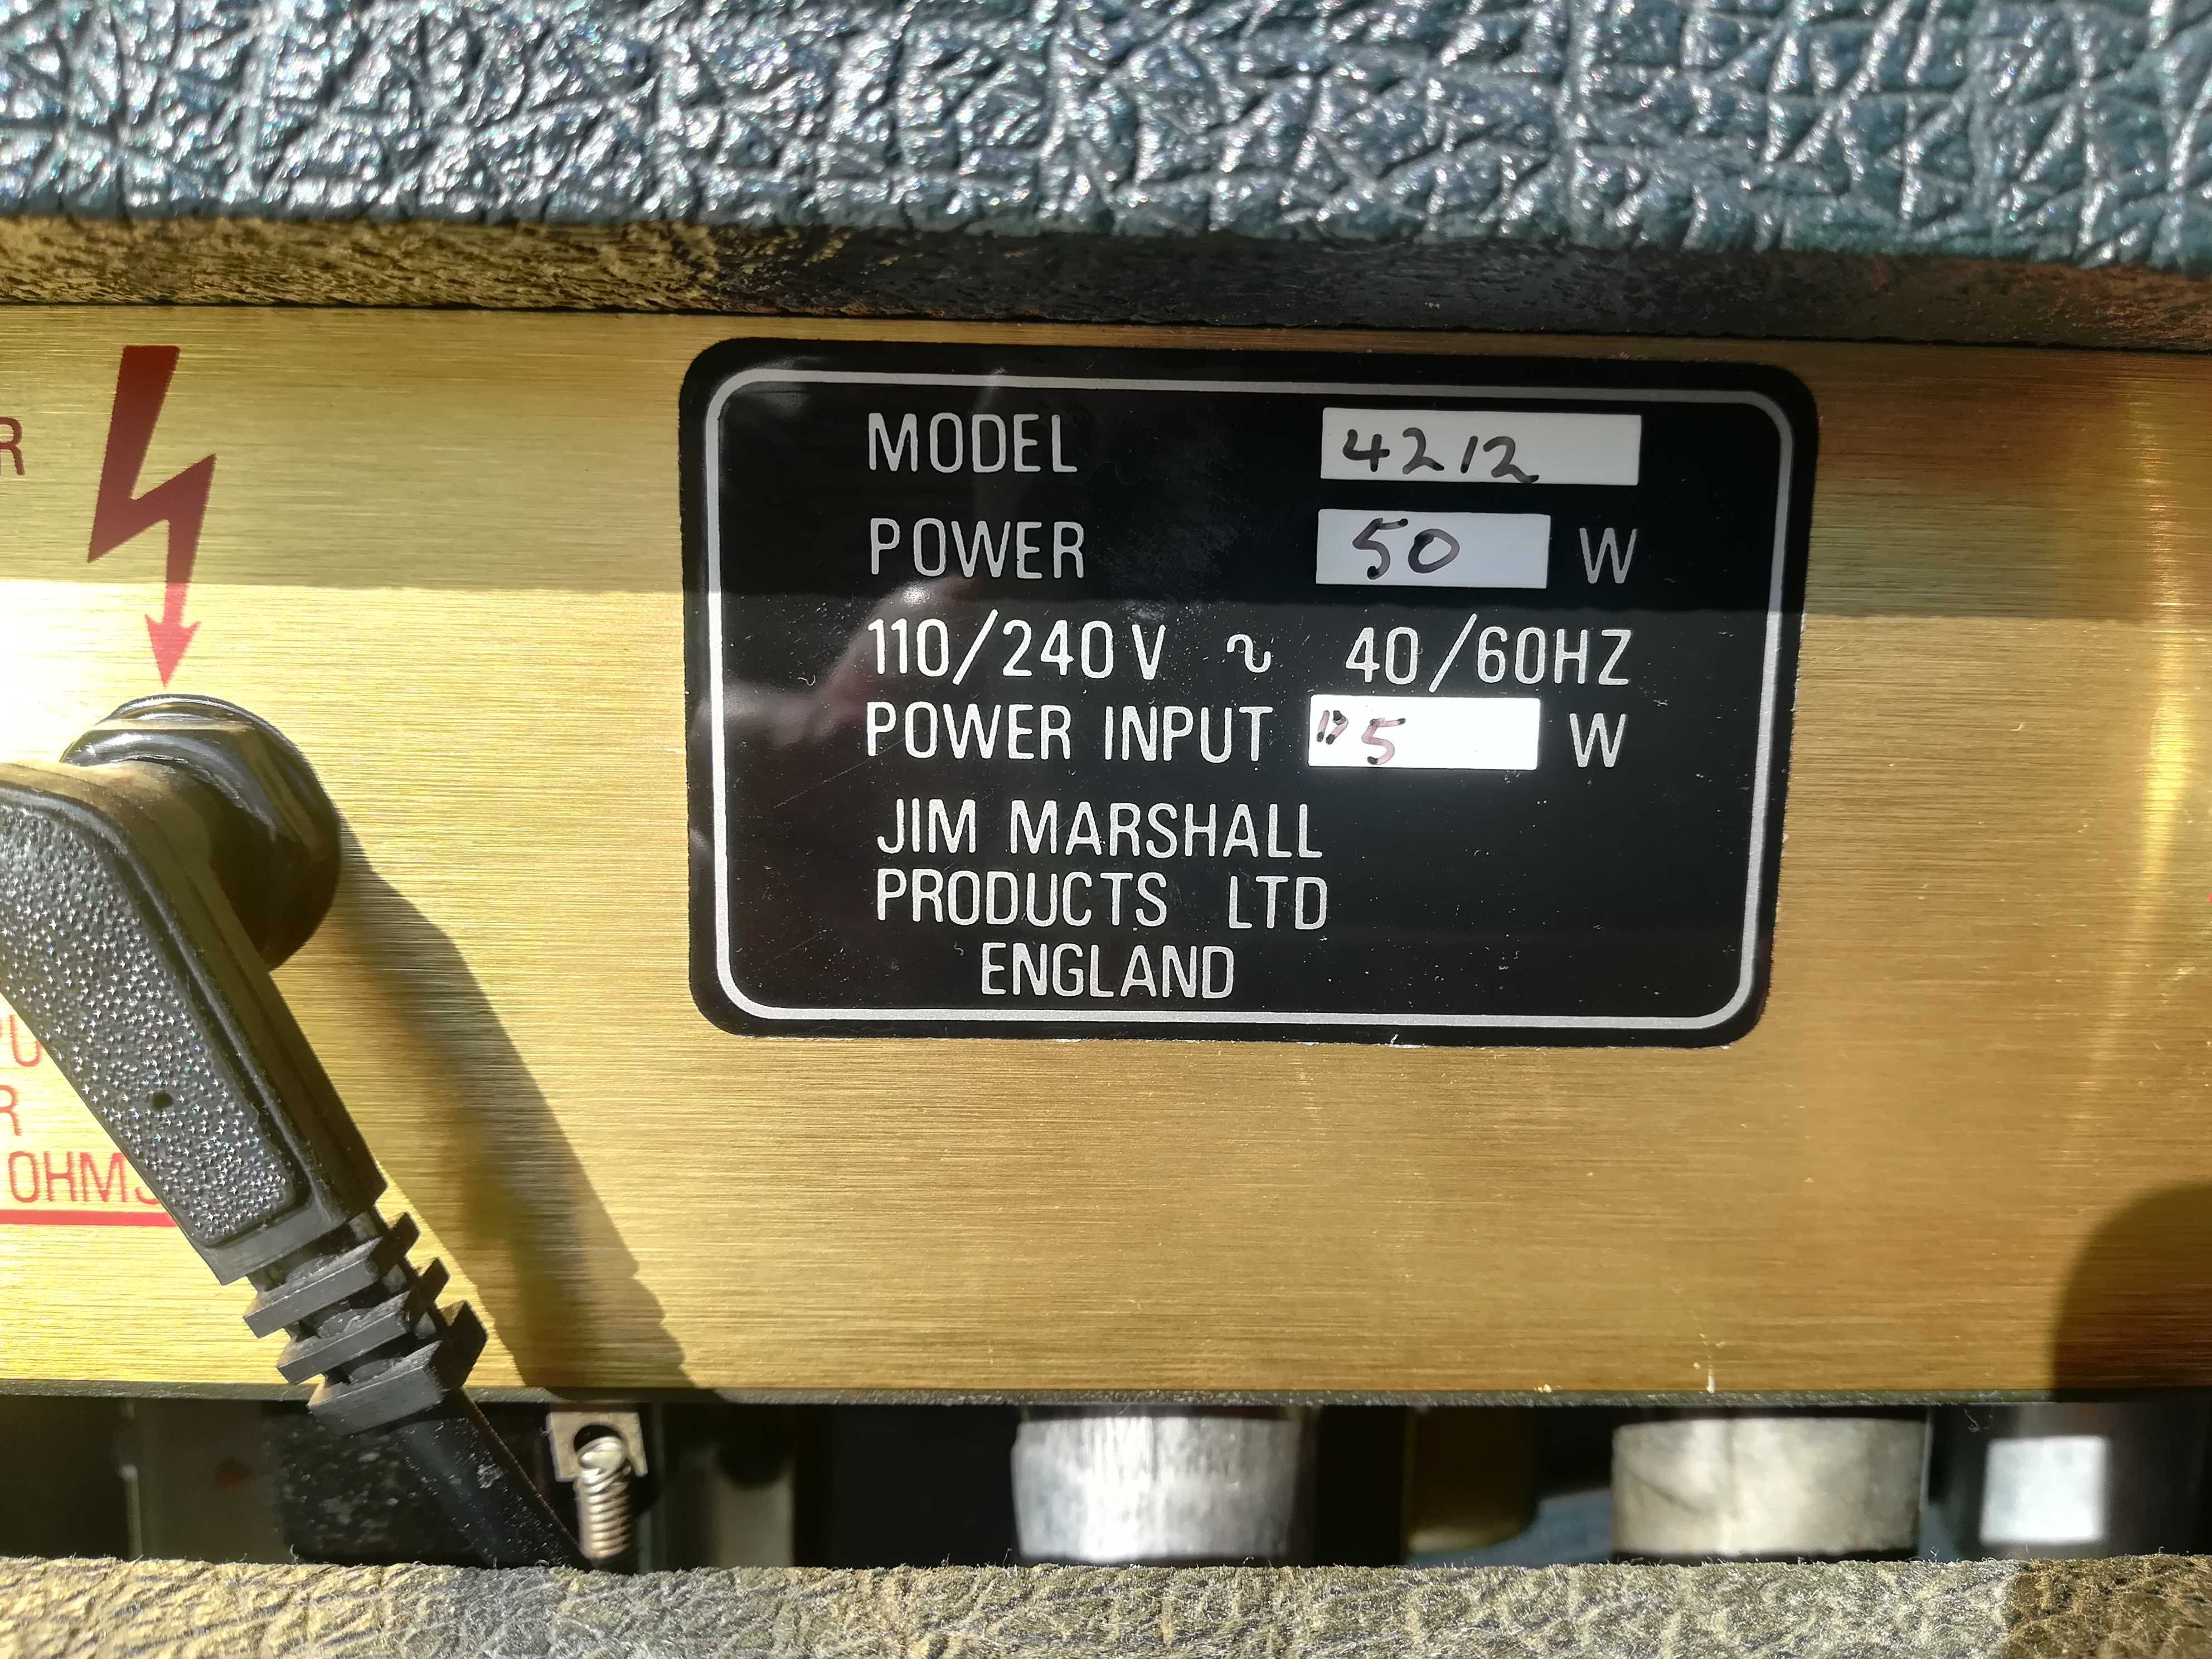 Marshall JCM800 de 1989